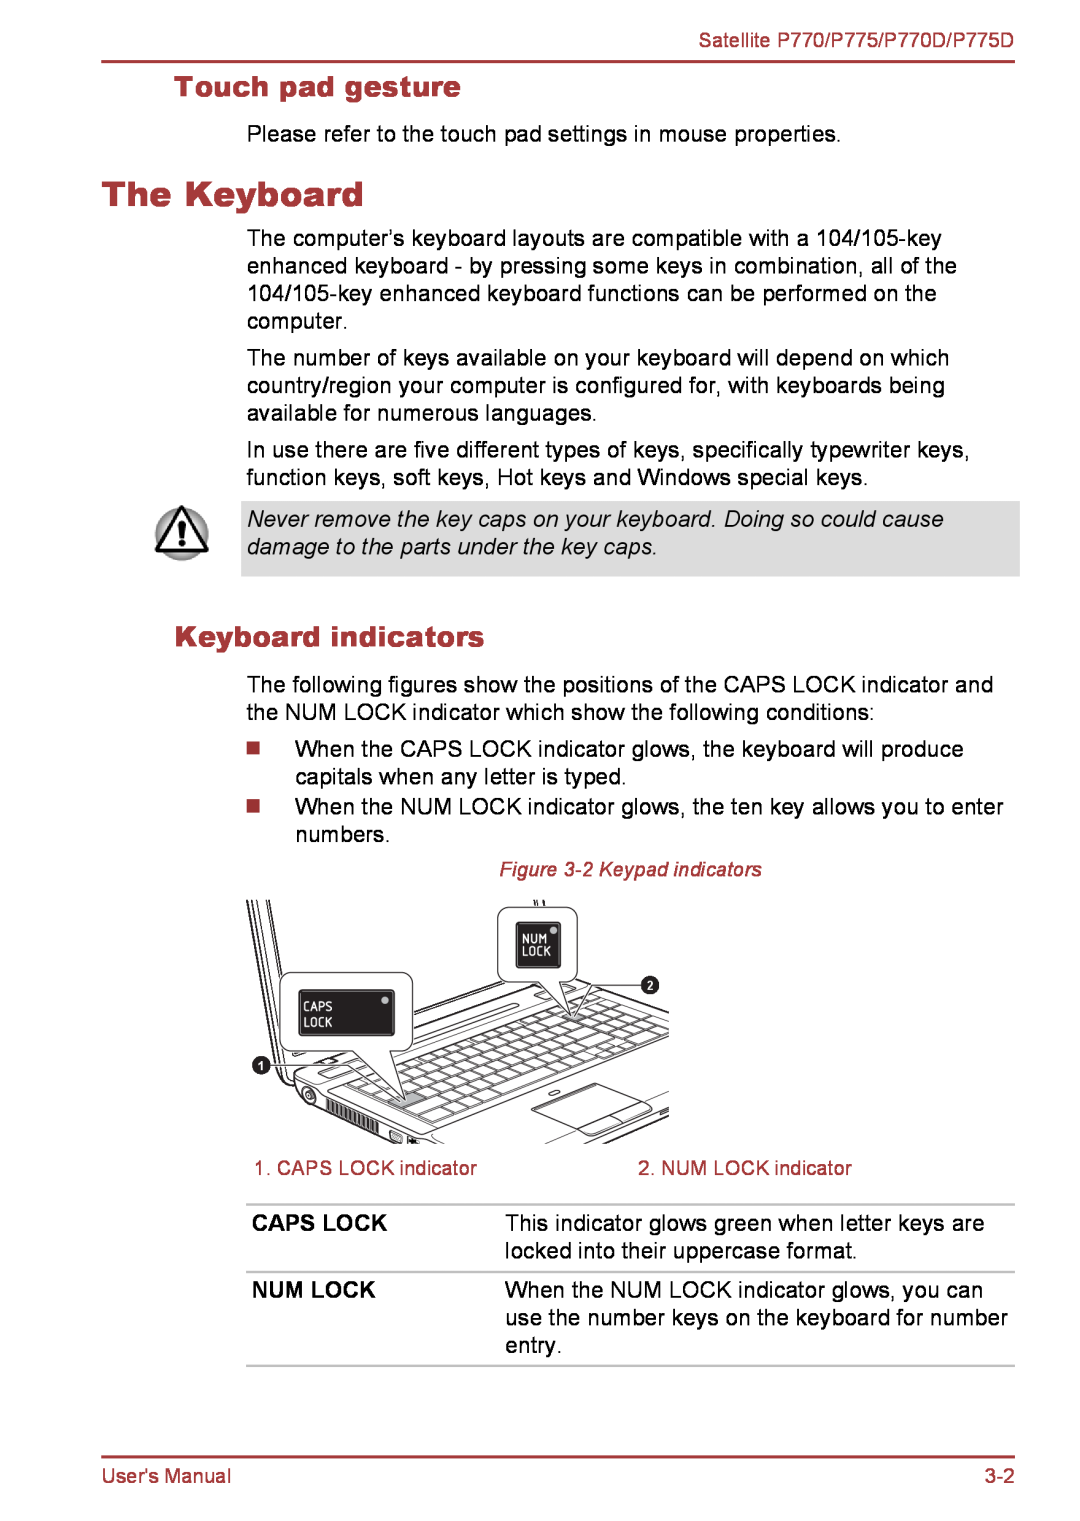 Toshiba P770 user manual The Keyboard, Touch pad gesture, Keyboard indicators, Caps Lock, Num Lock 